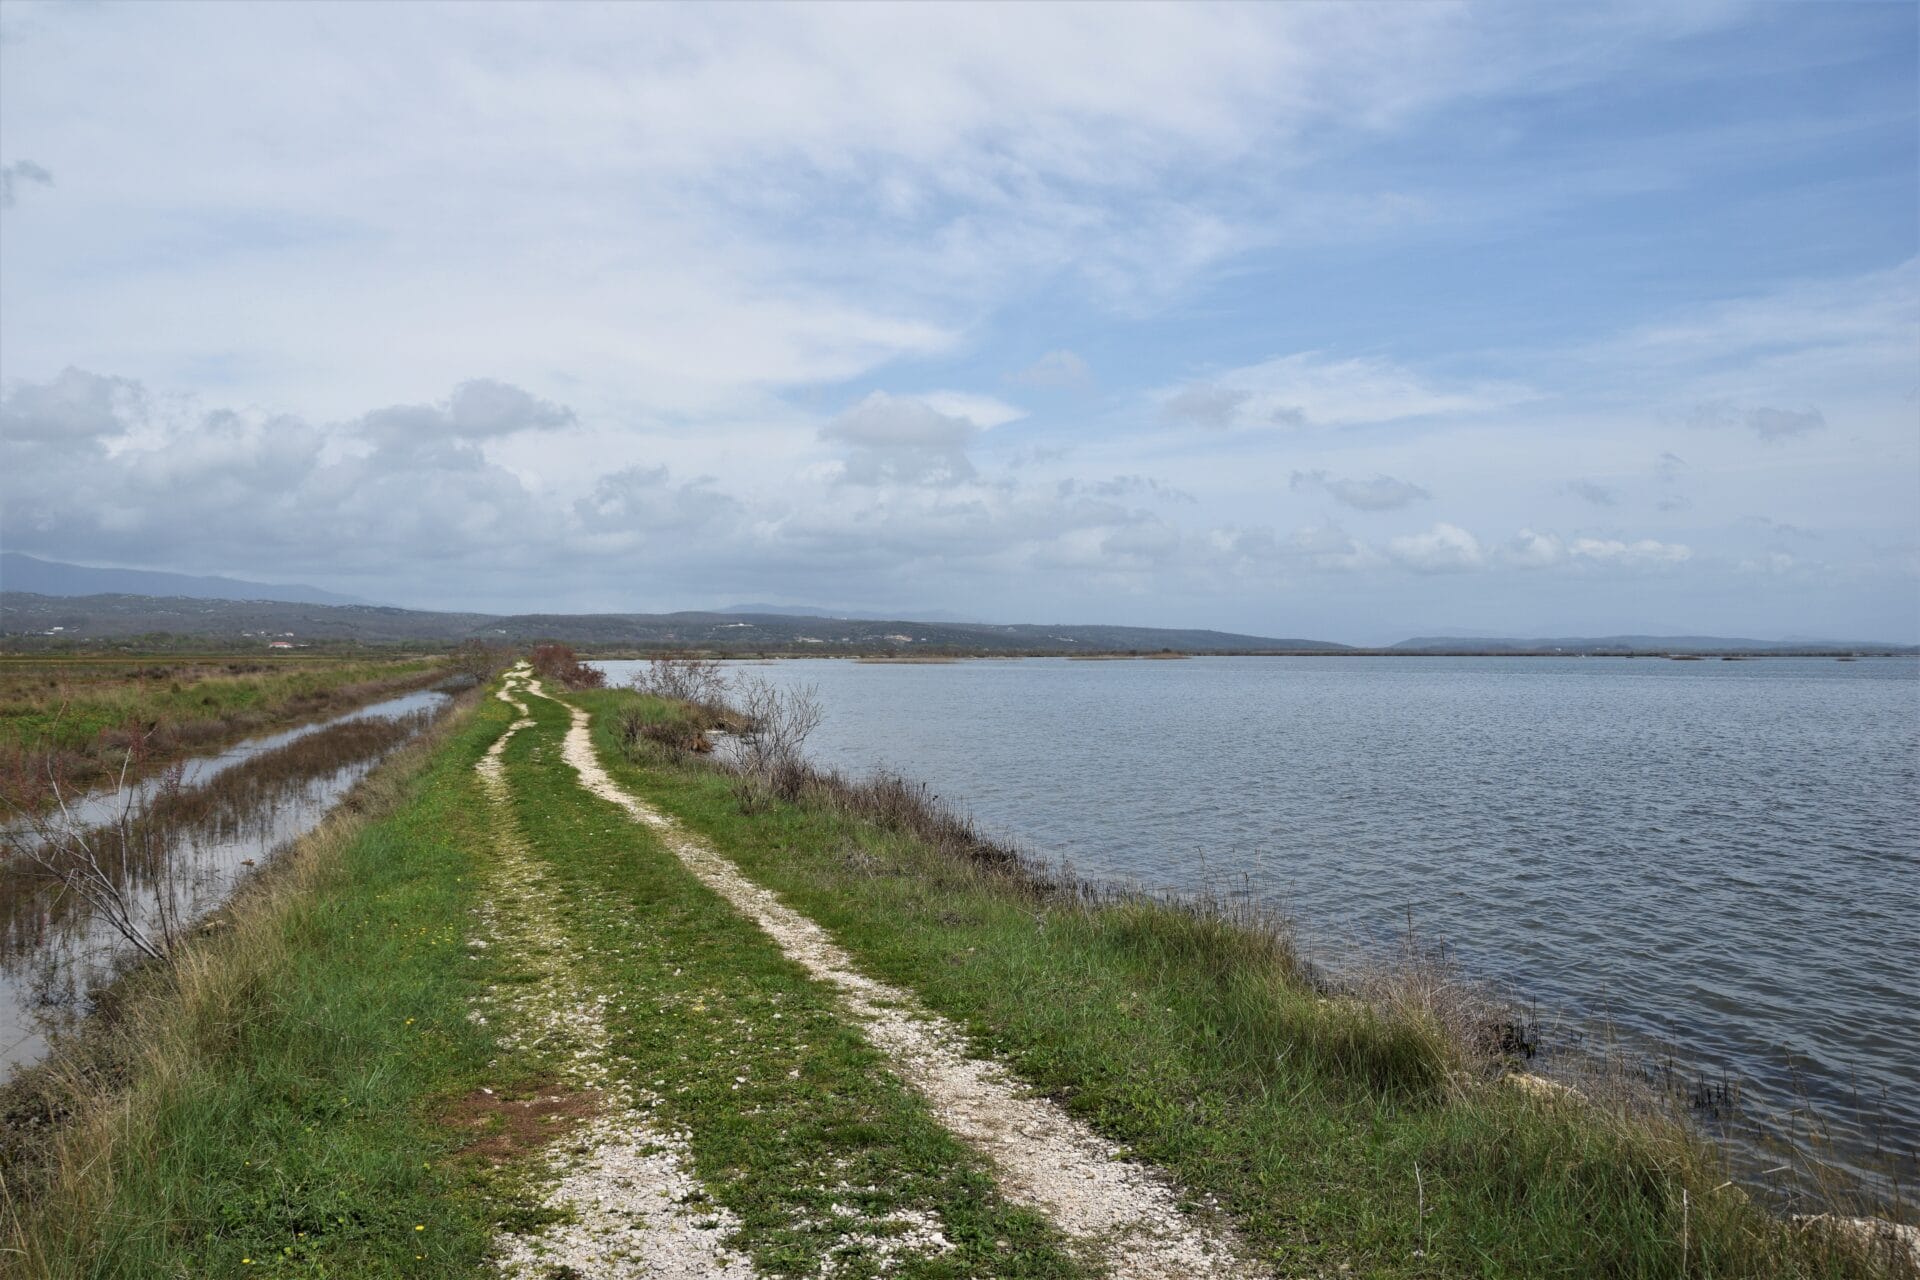 a dirt path runs along the shores of a lake